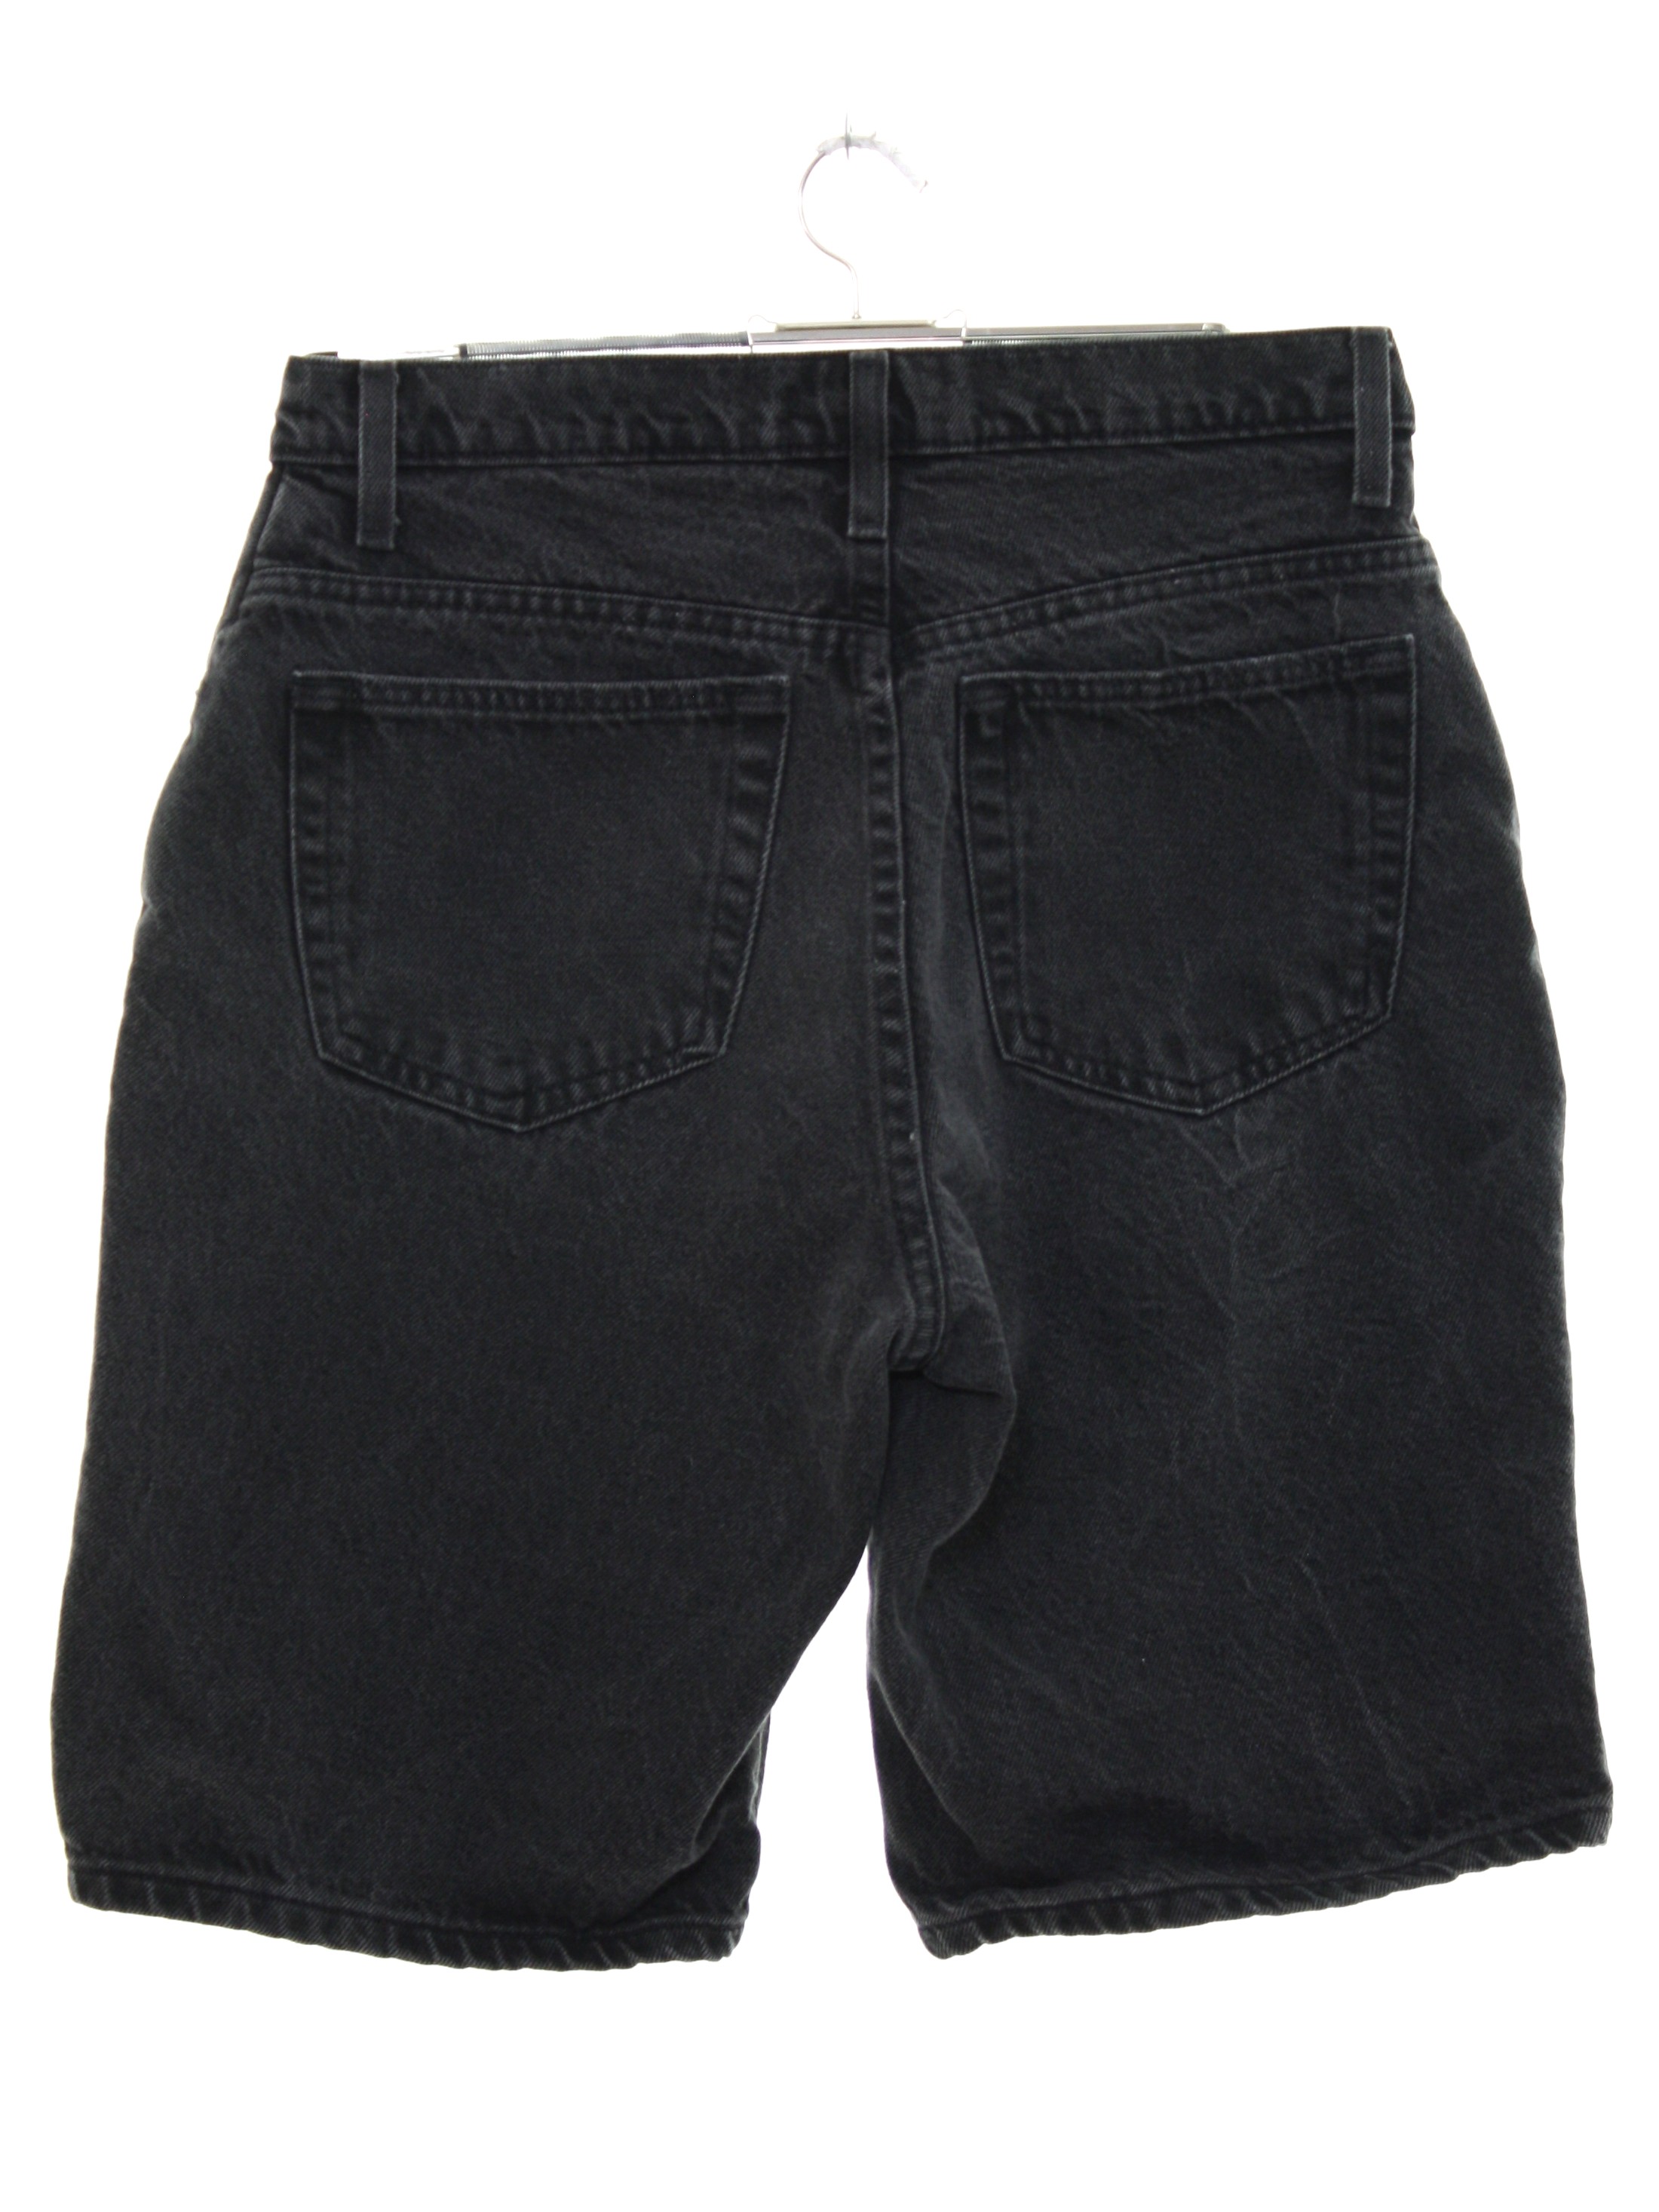 Vintage 90s Shorts: 90s -212- Mens black solid colored cotton denim ...